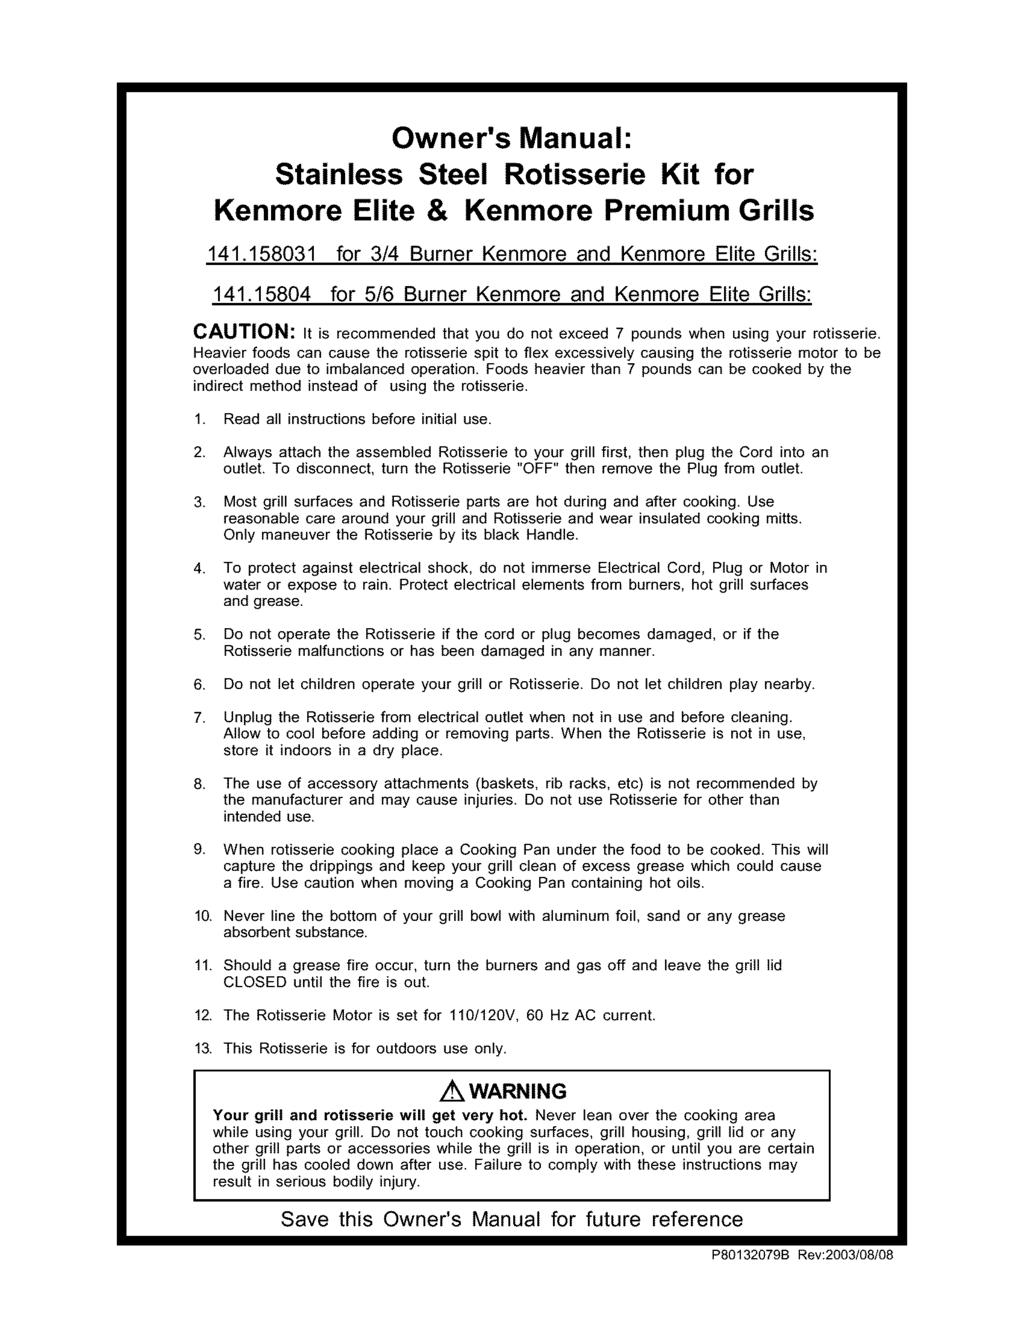 Owner's Manual: Stainless Steel Rotisserie Kit for Kenmore Elite & Kenmore Premium Grills 141.158031 for 3/4 Burner Kenmore and Kenmore Elite Grills: 141.